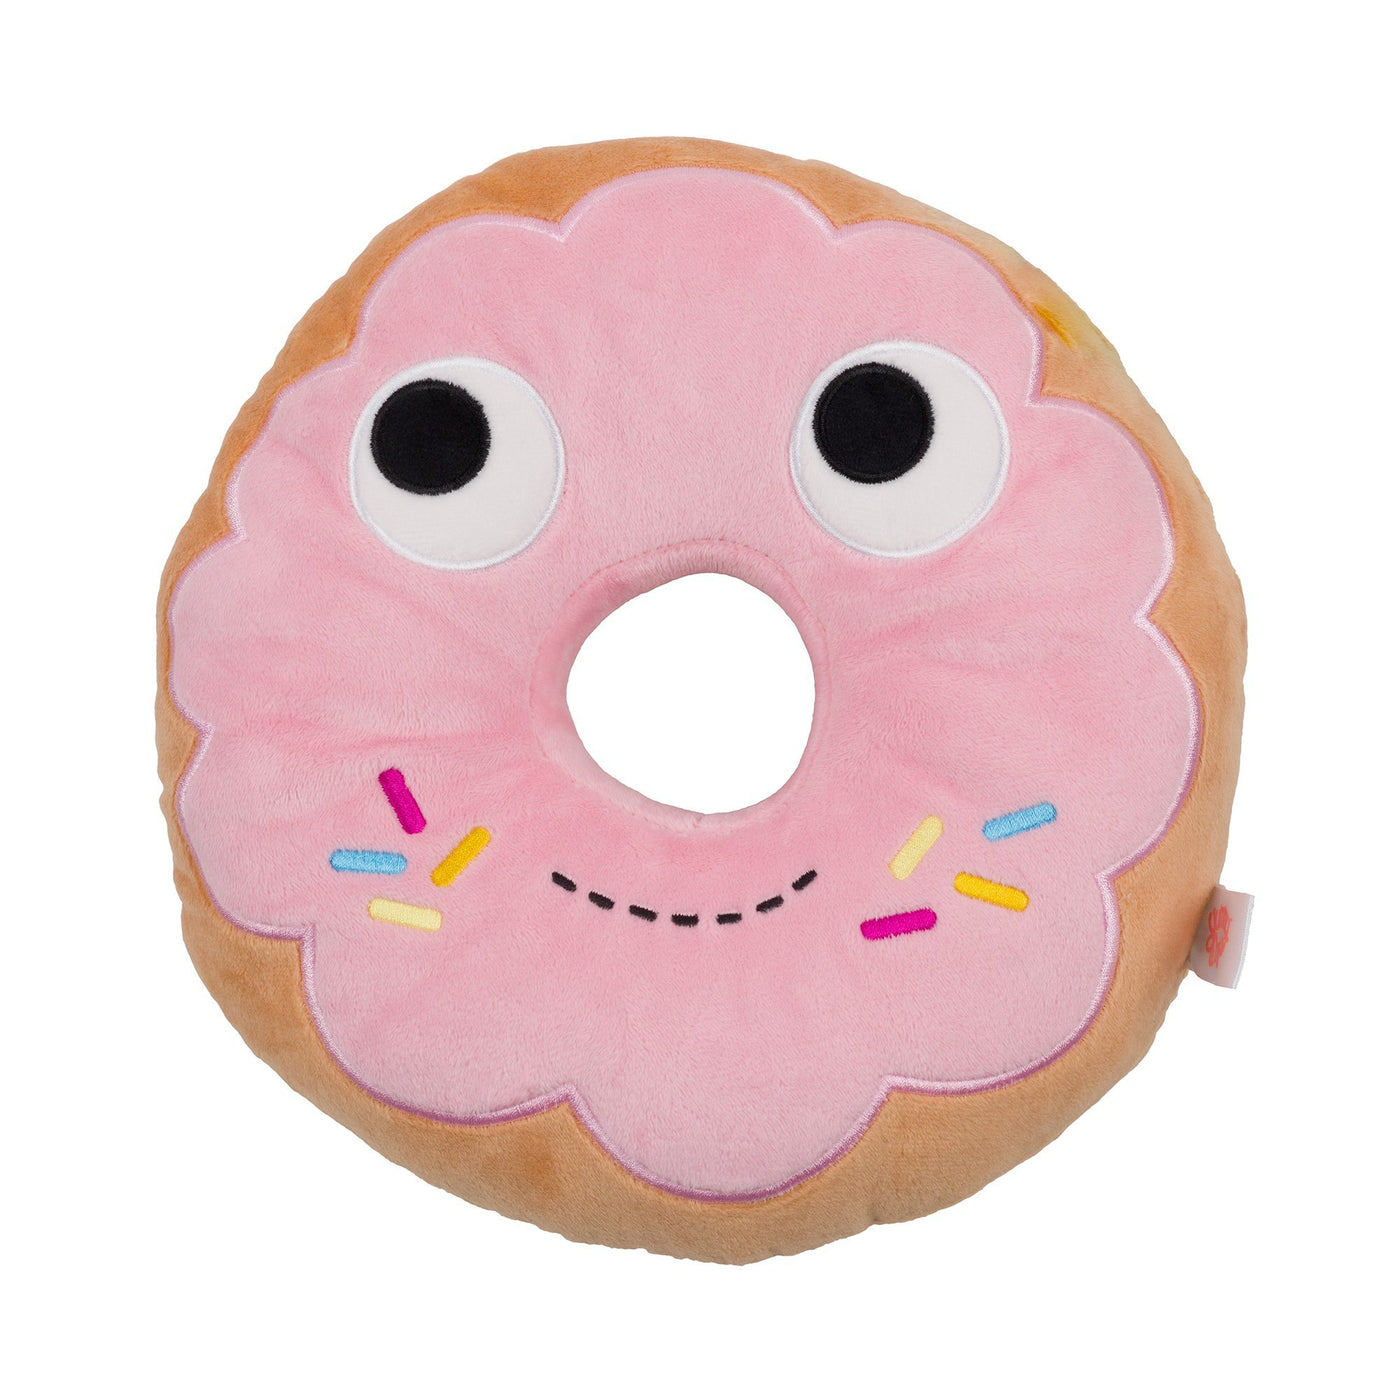 Donut Plush Kidrobot Yummy World